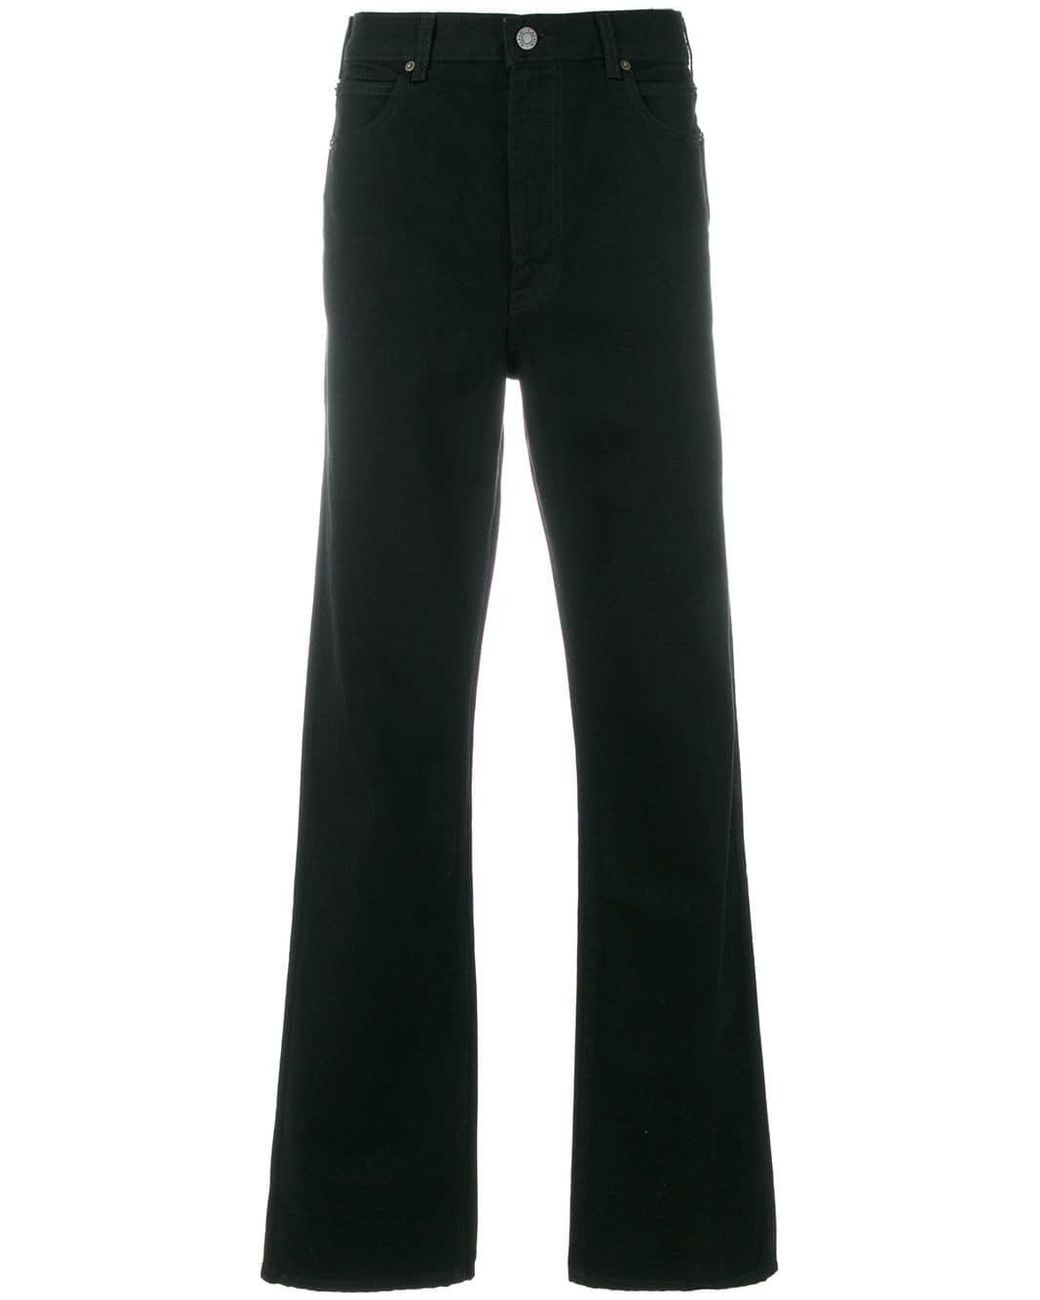 CALVIN KLEIN 205W39NYC Denim Boot-cut Jeans in Black for Men - Lyst